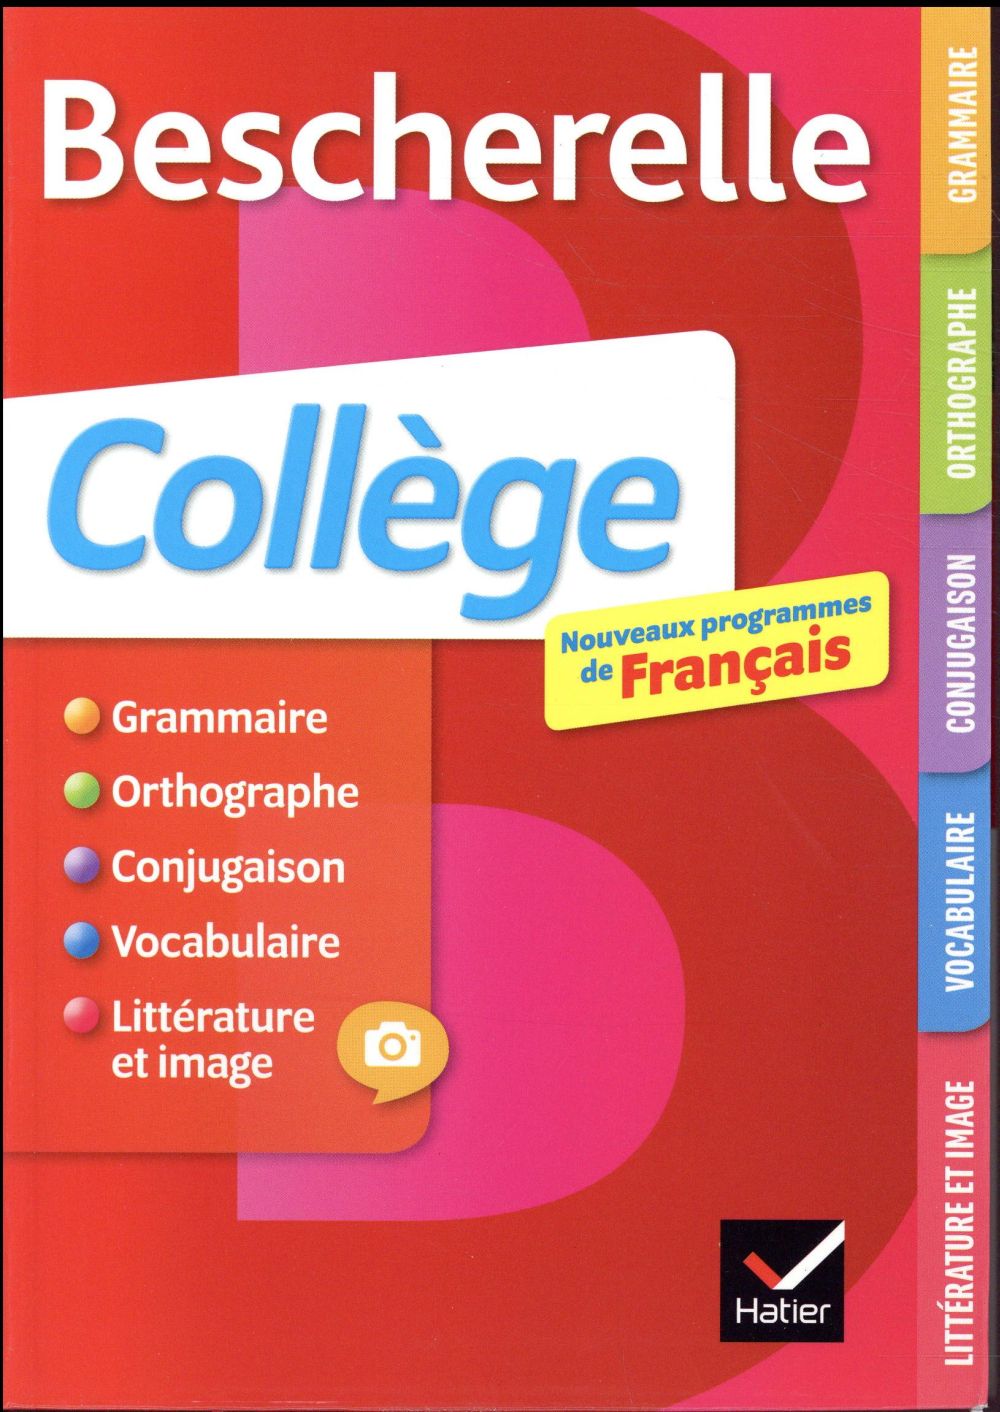 BESCHERELLE FRANCAIS COLLEGE (6, 5E, 4E, 3E) - GRAMMAIRE, ORTHOGRAPHE, CONJUGAISON, VOCABULAIRE....